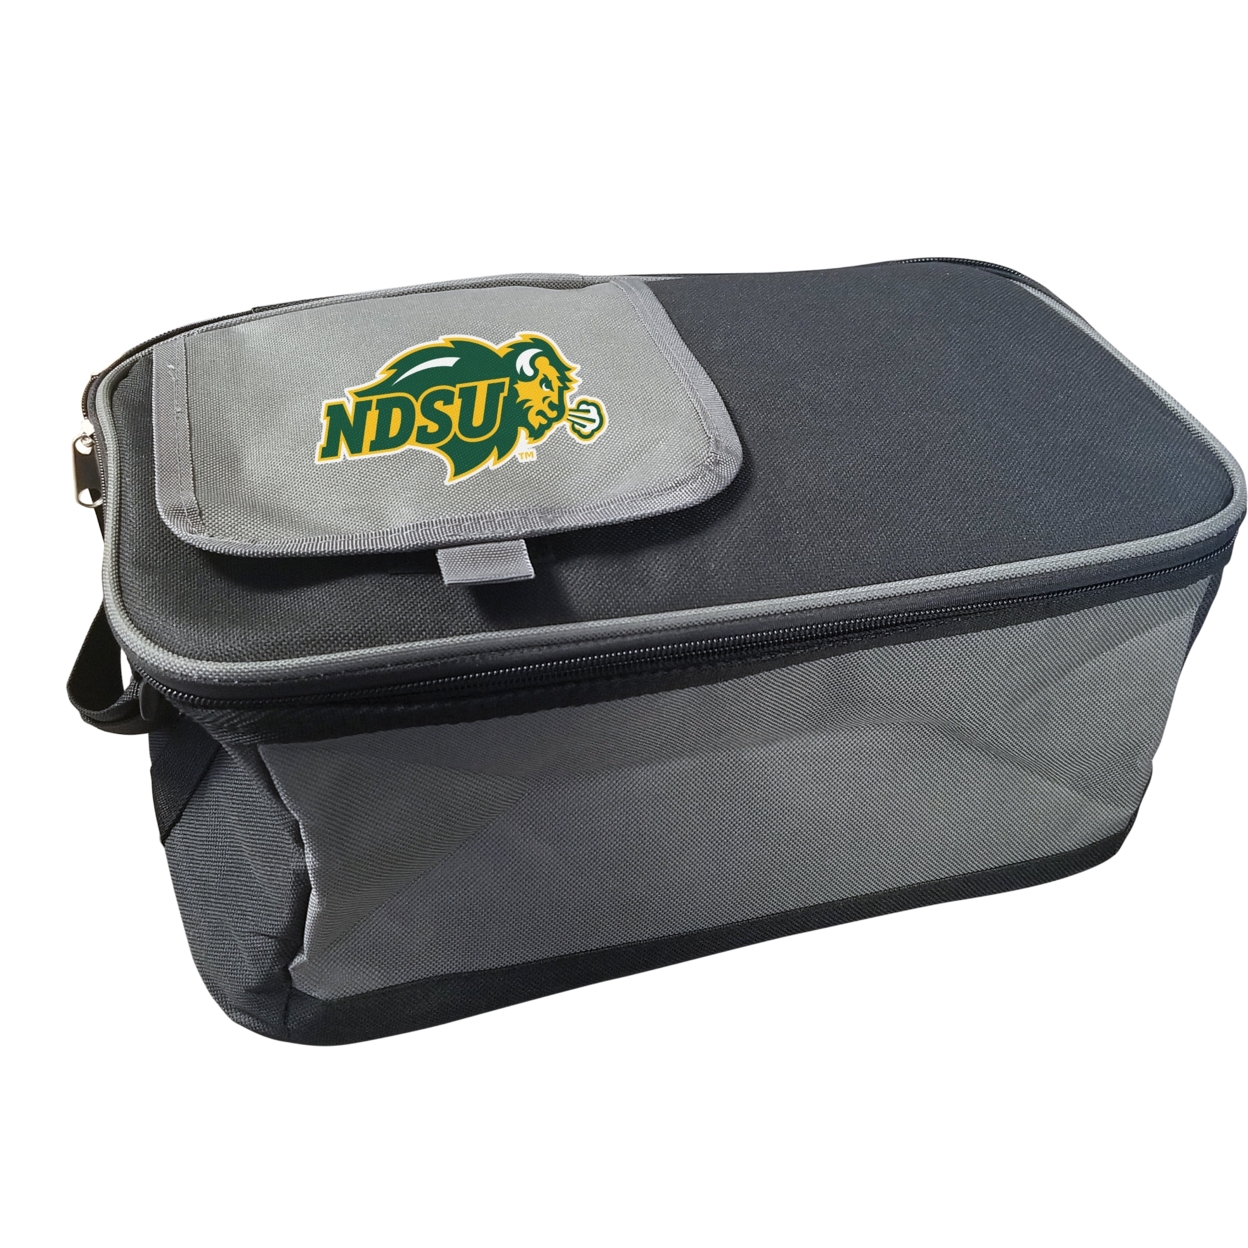 North Dakota State Bison 9 Pack Cooler